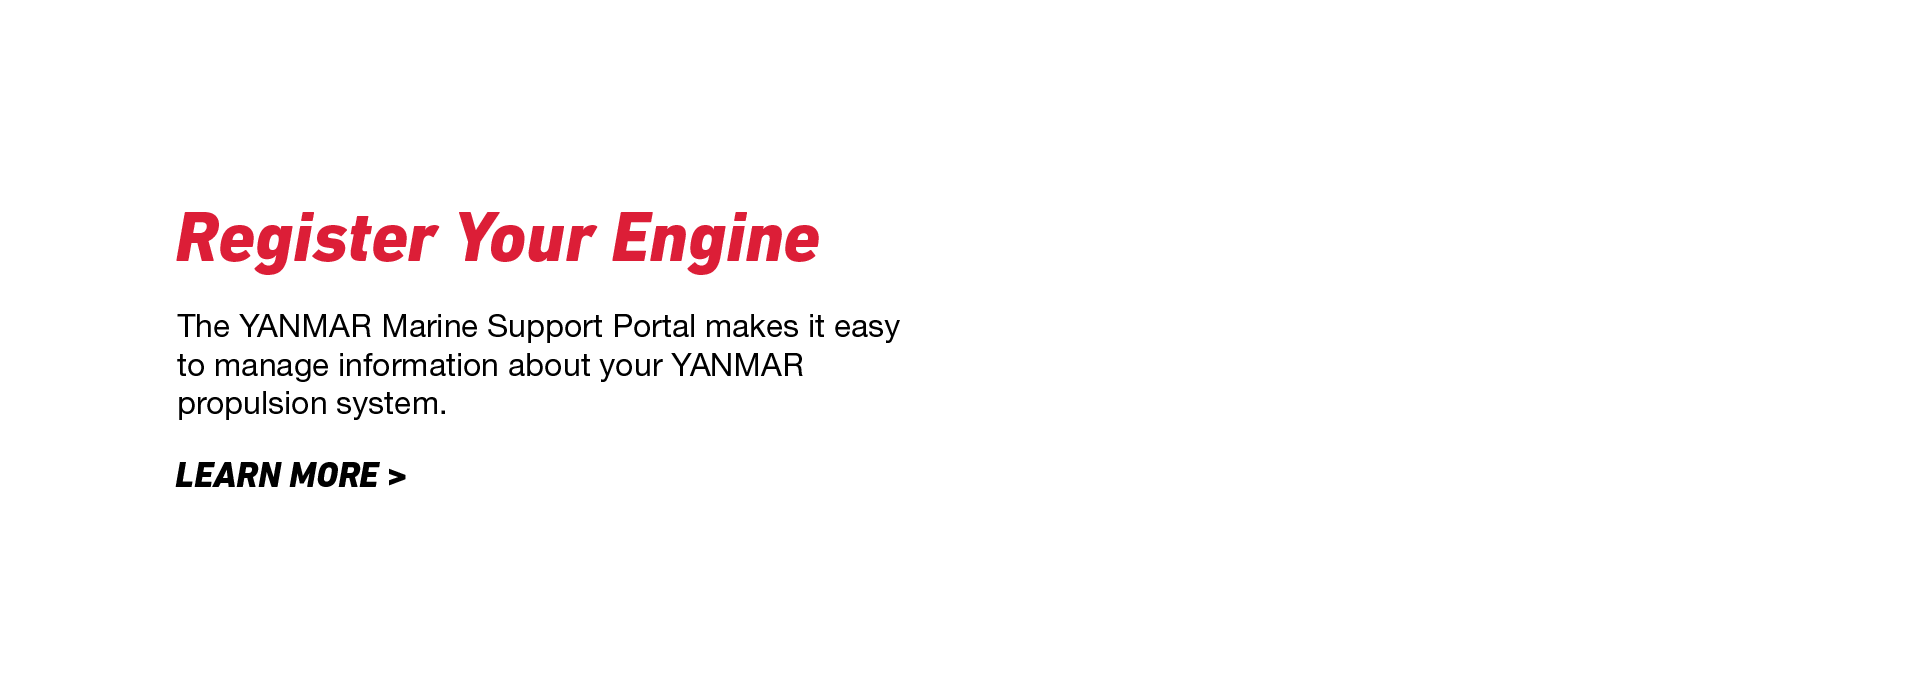 Register your engine